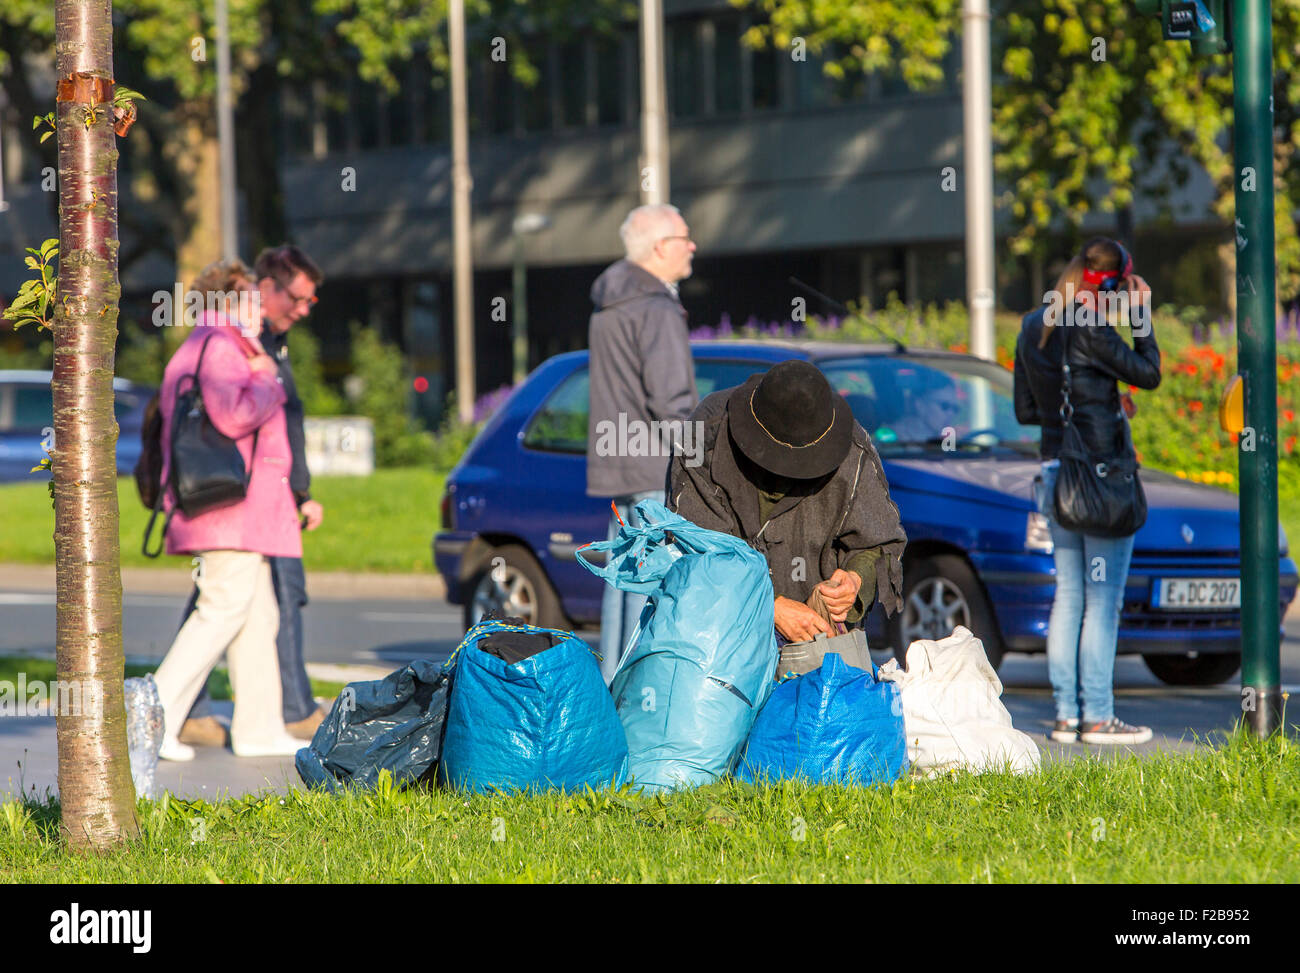 Homeless person, their belongings in plastic sacks, Stock Photo